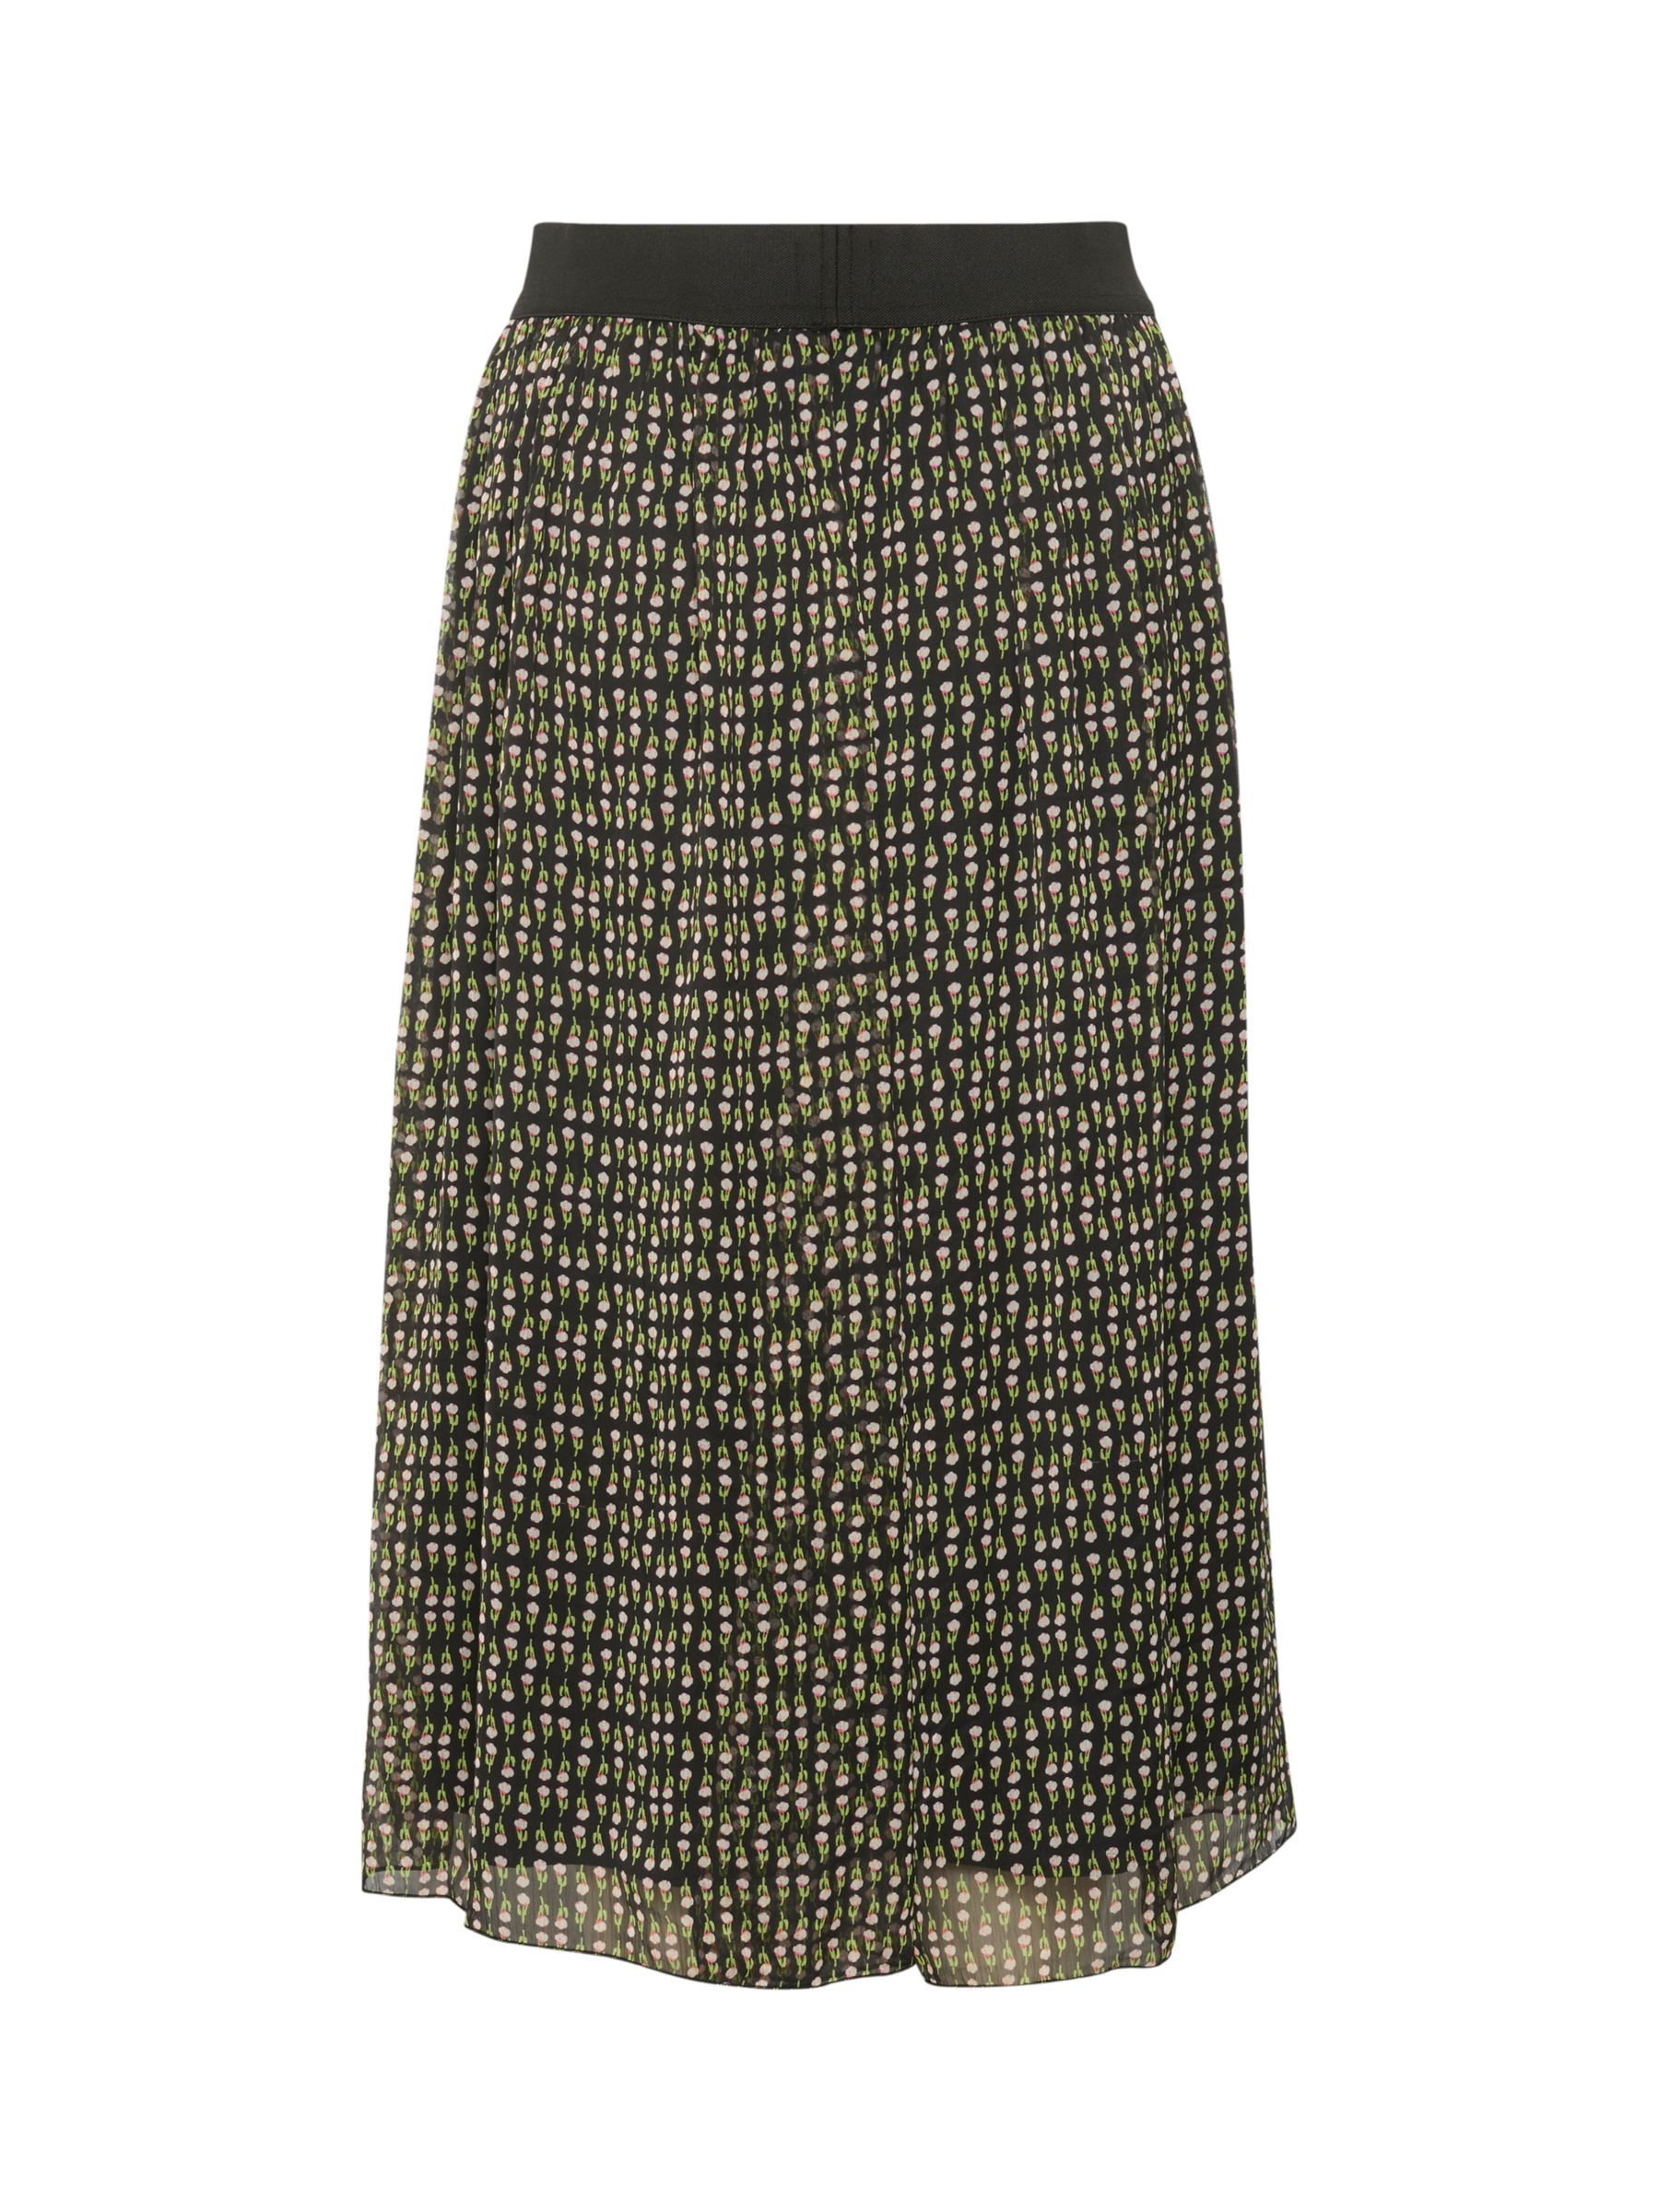 Buy Saint Tropez Toral Line Florals Print Midi Skirt, Black/Multi Online at johnlewis.com